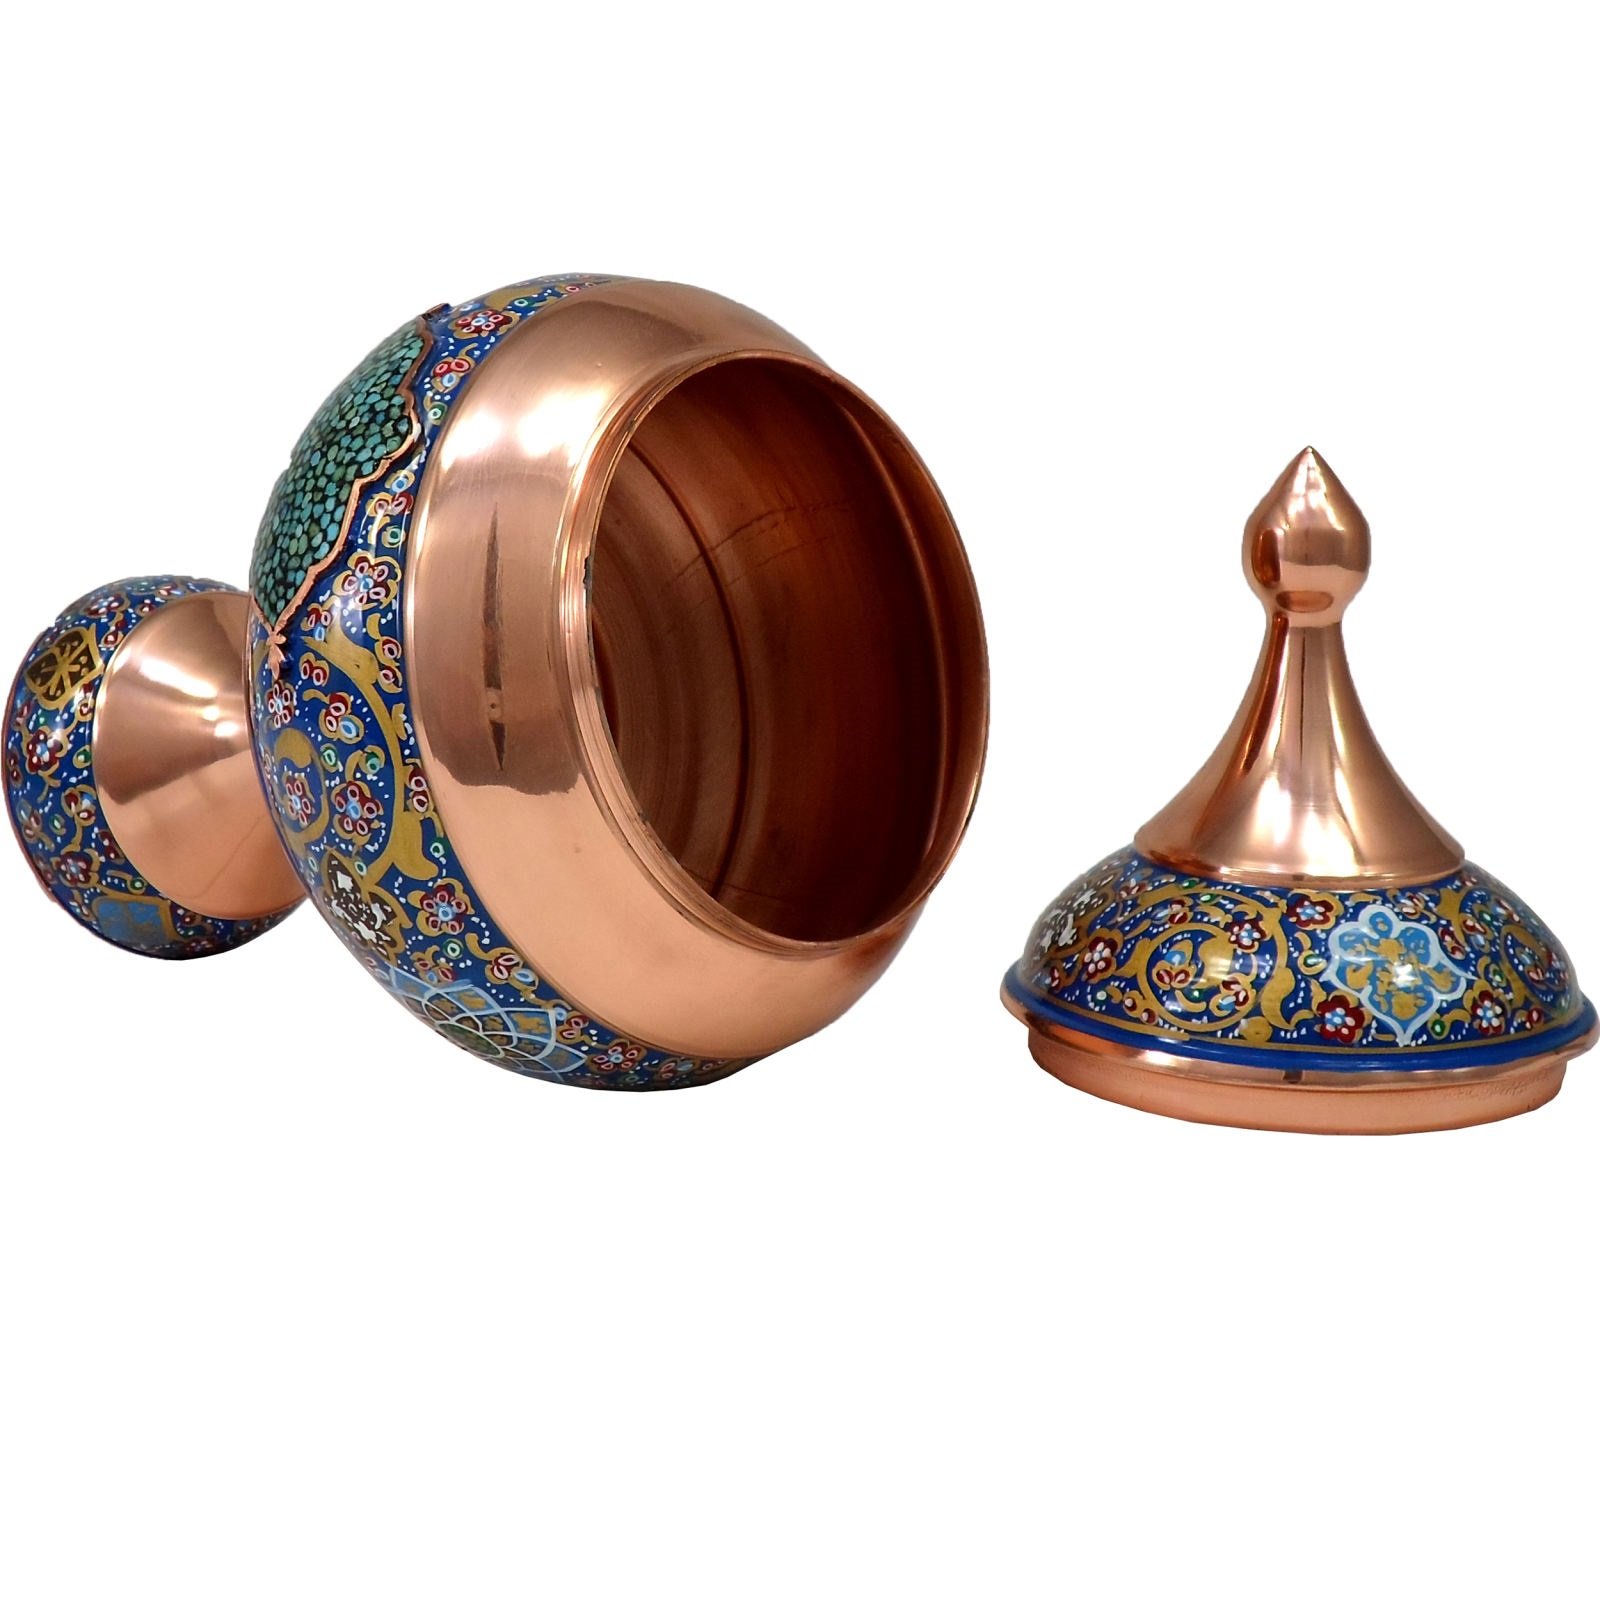 Handicraft Copper container Model pardaz Code 26,copper,copper metal,copper persian